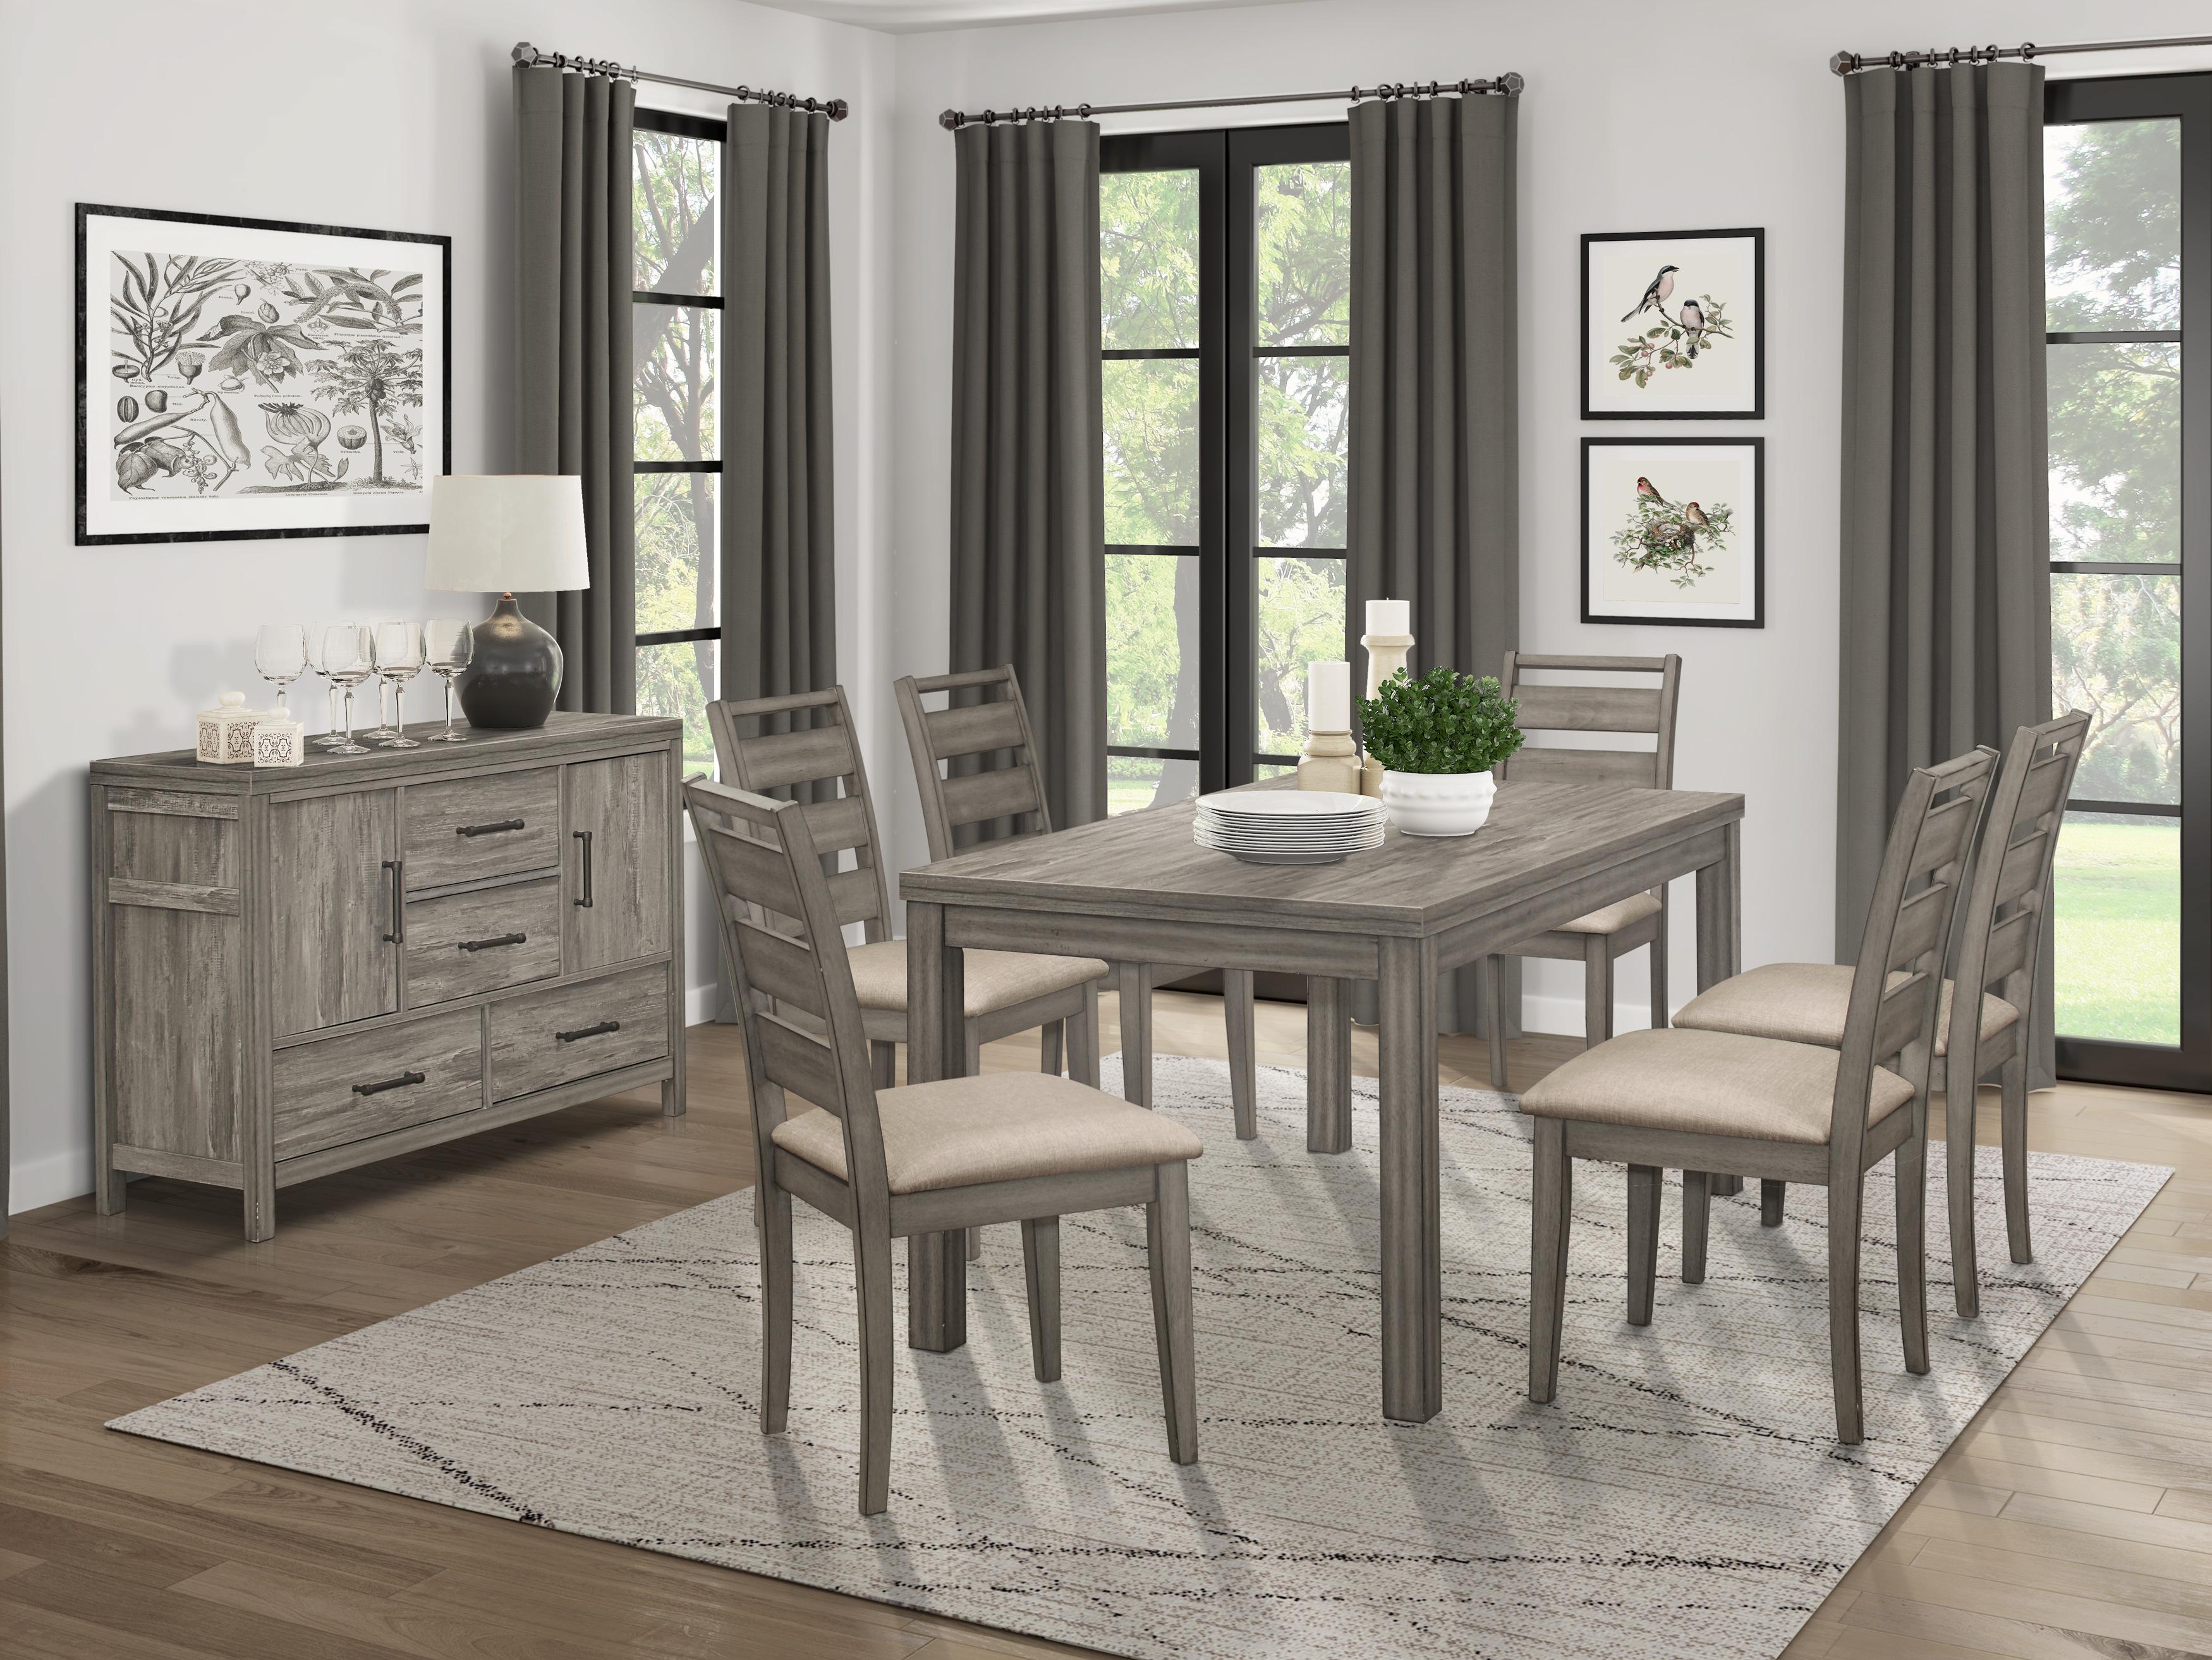 Rustic Dining Room Set 1526-64-8PC Bainbridge 1526-64-8PC in Gray Polyester